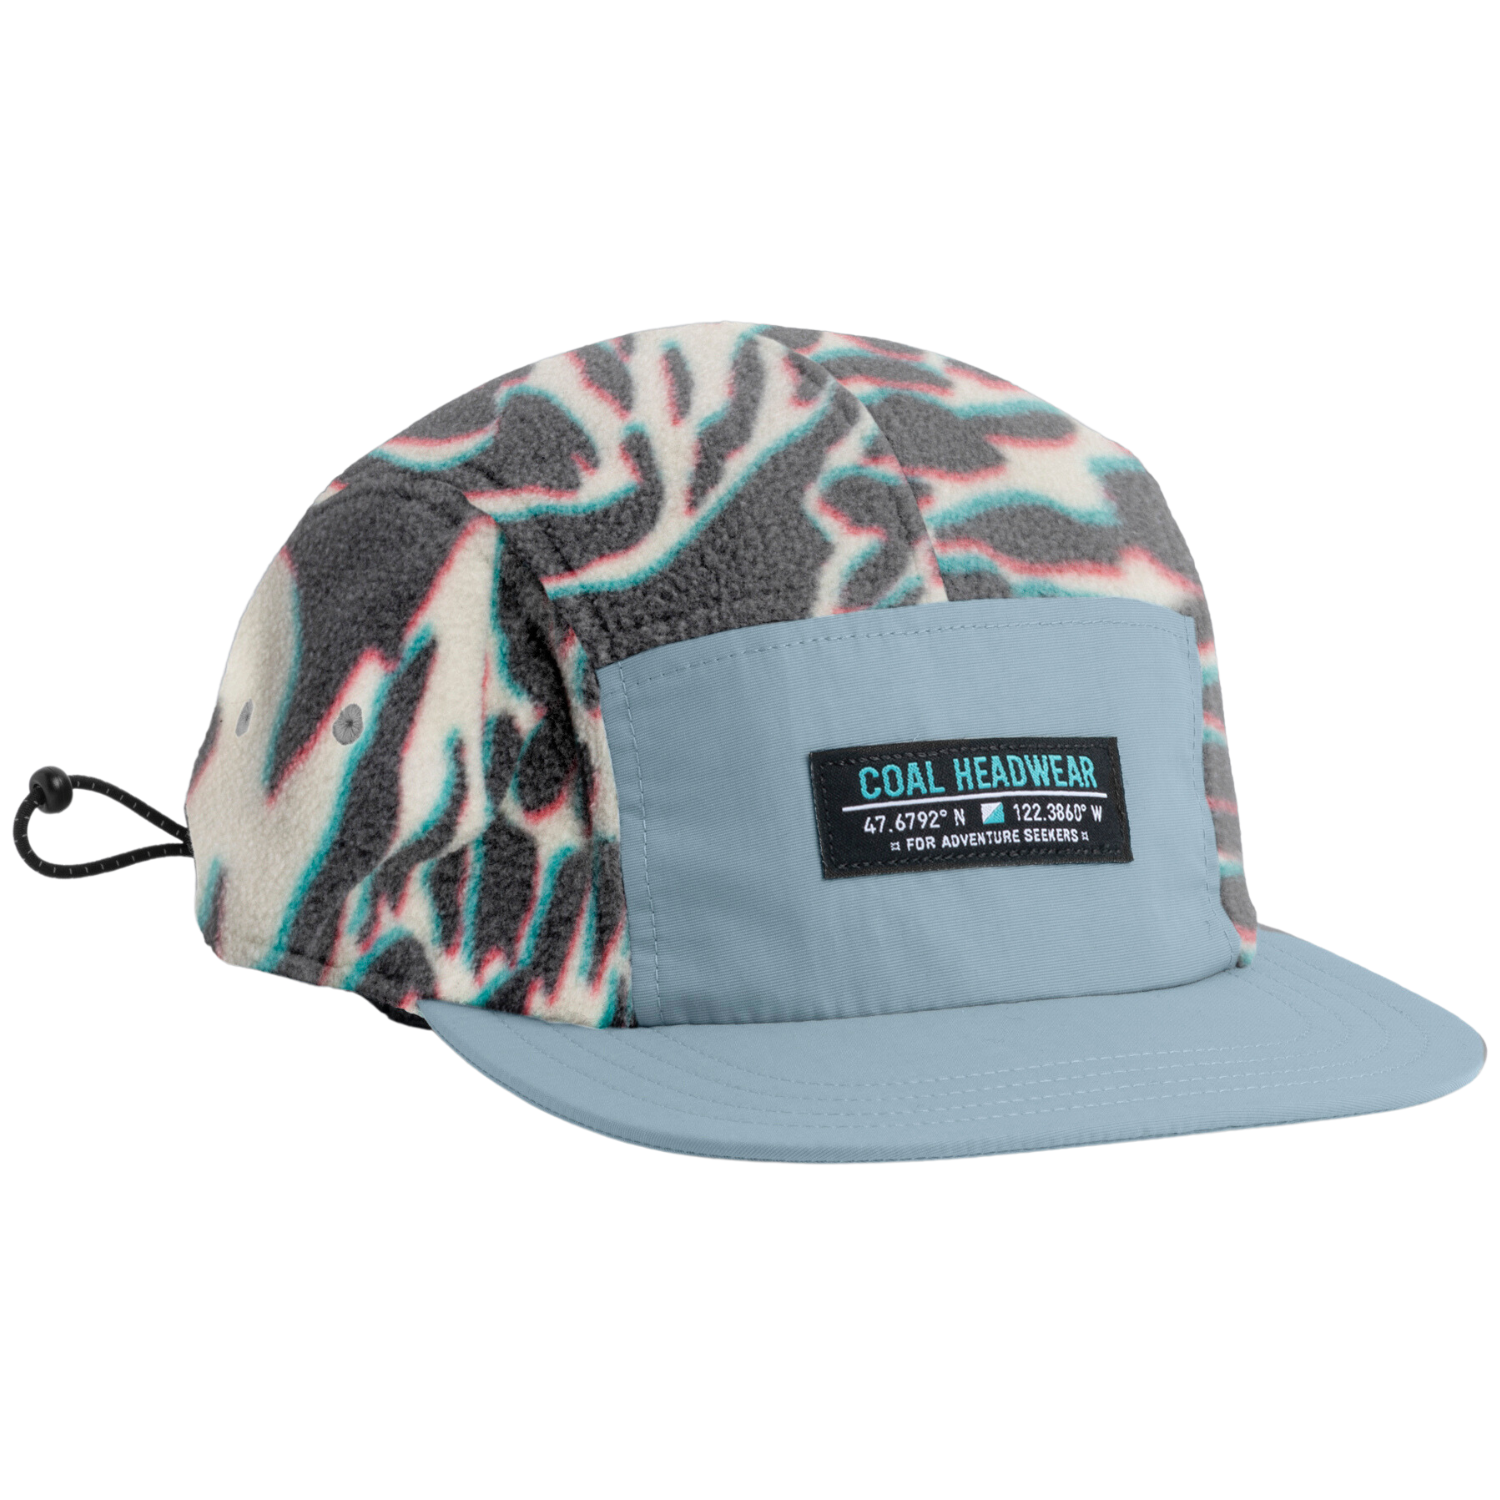 Hats for Sale - Stylish Versatile 